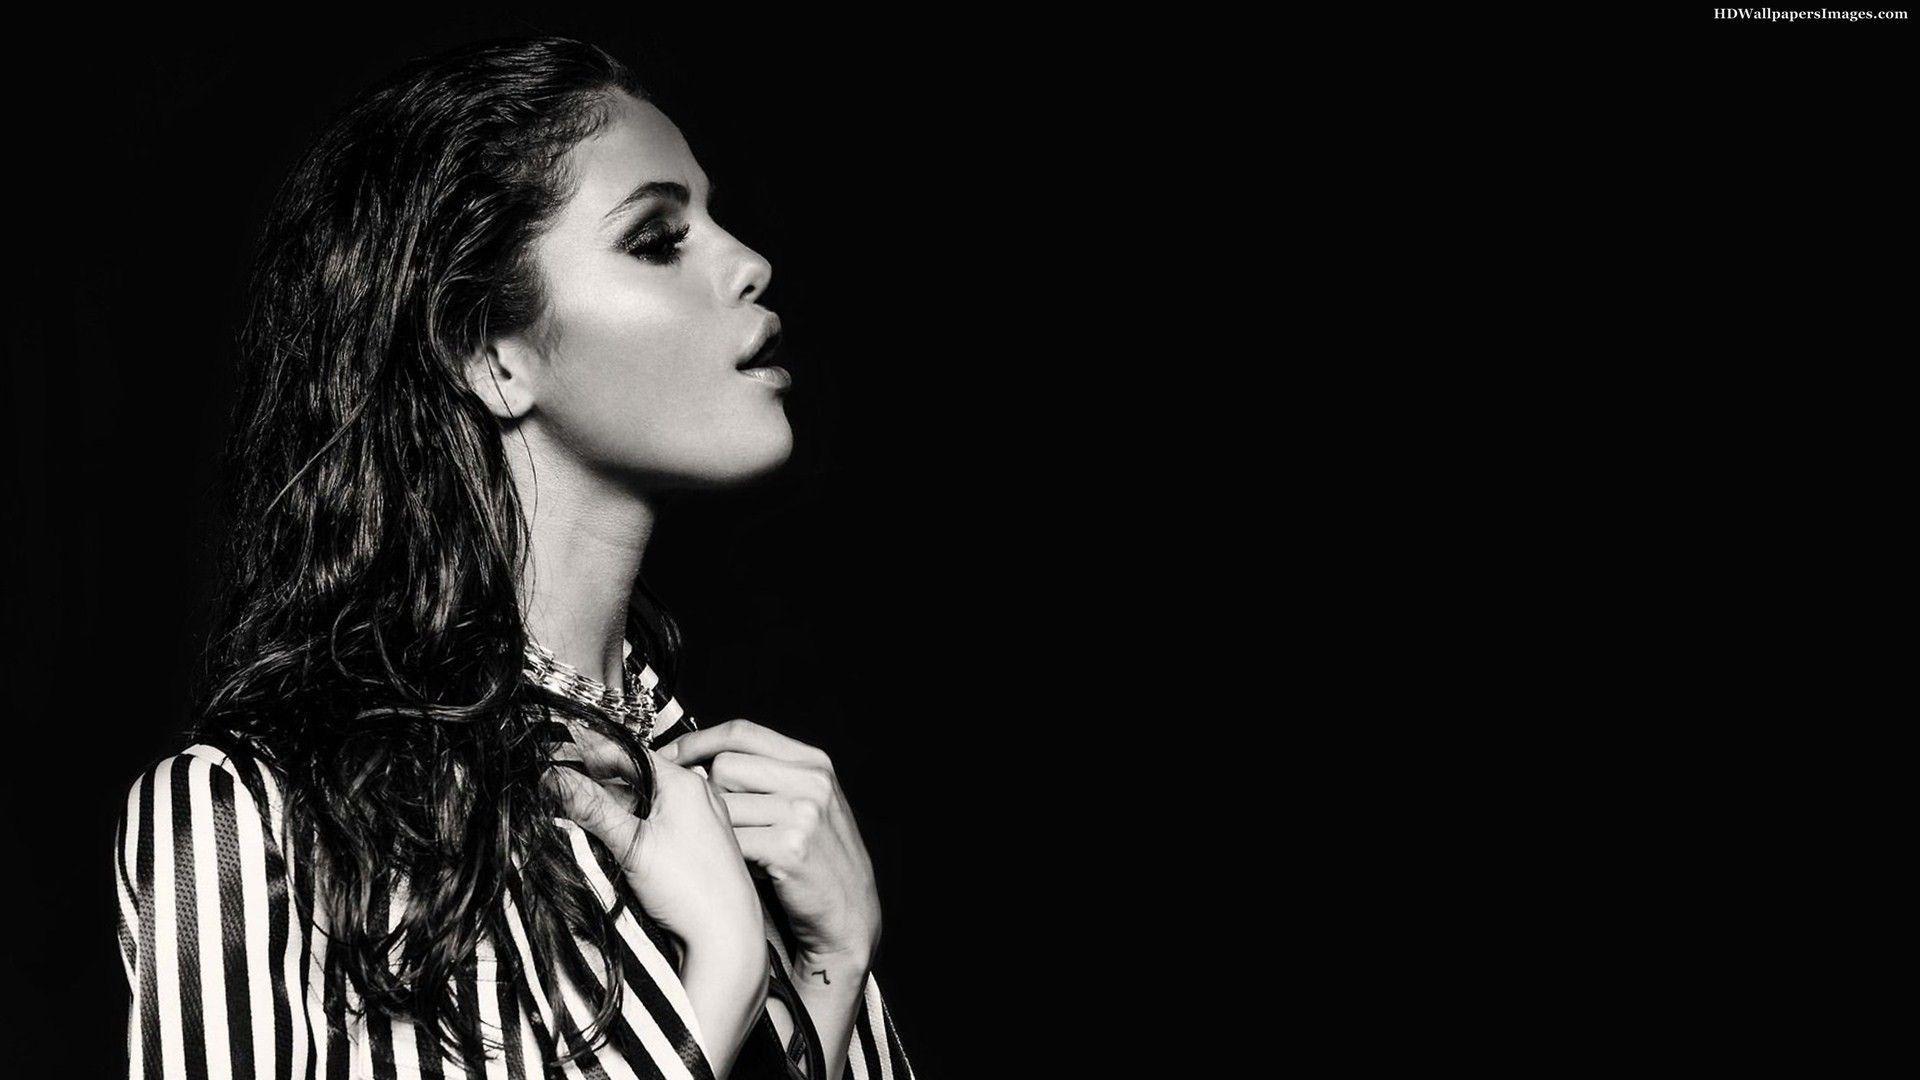 Selena Gomez 2015 Image. HD Wallpaper Image